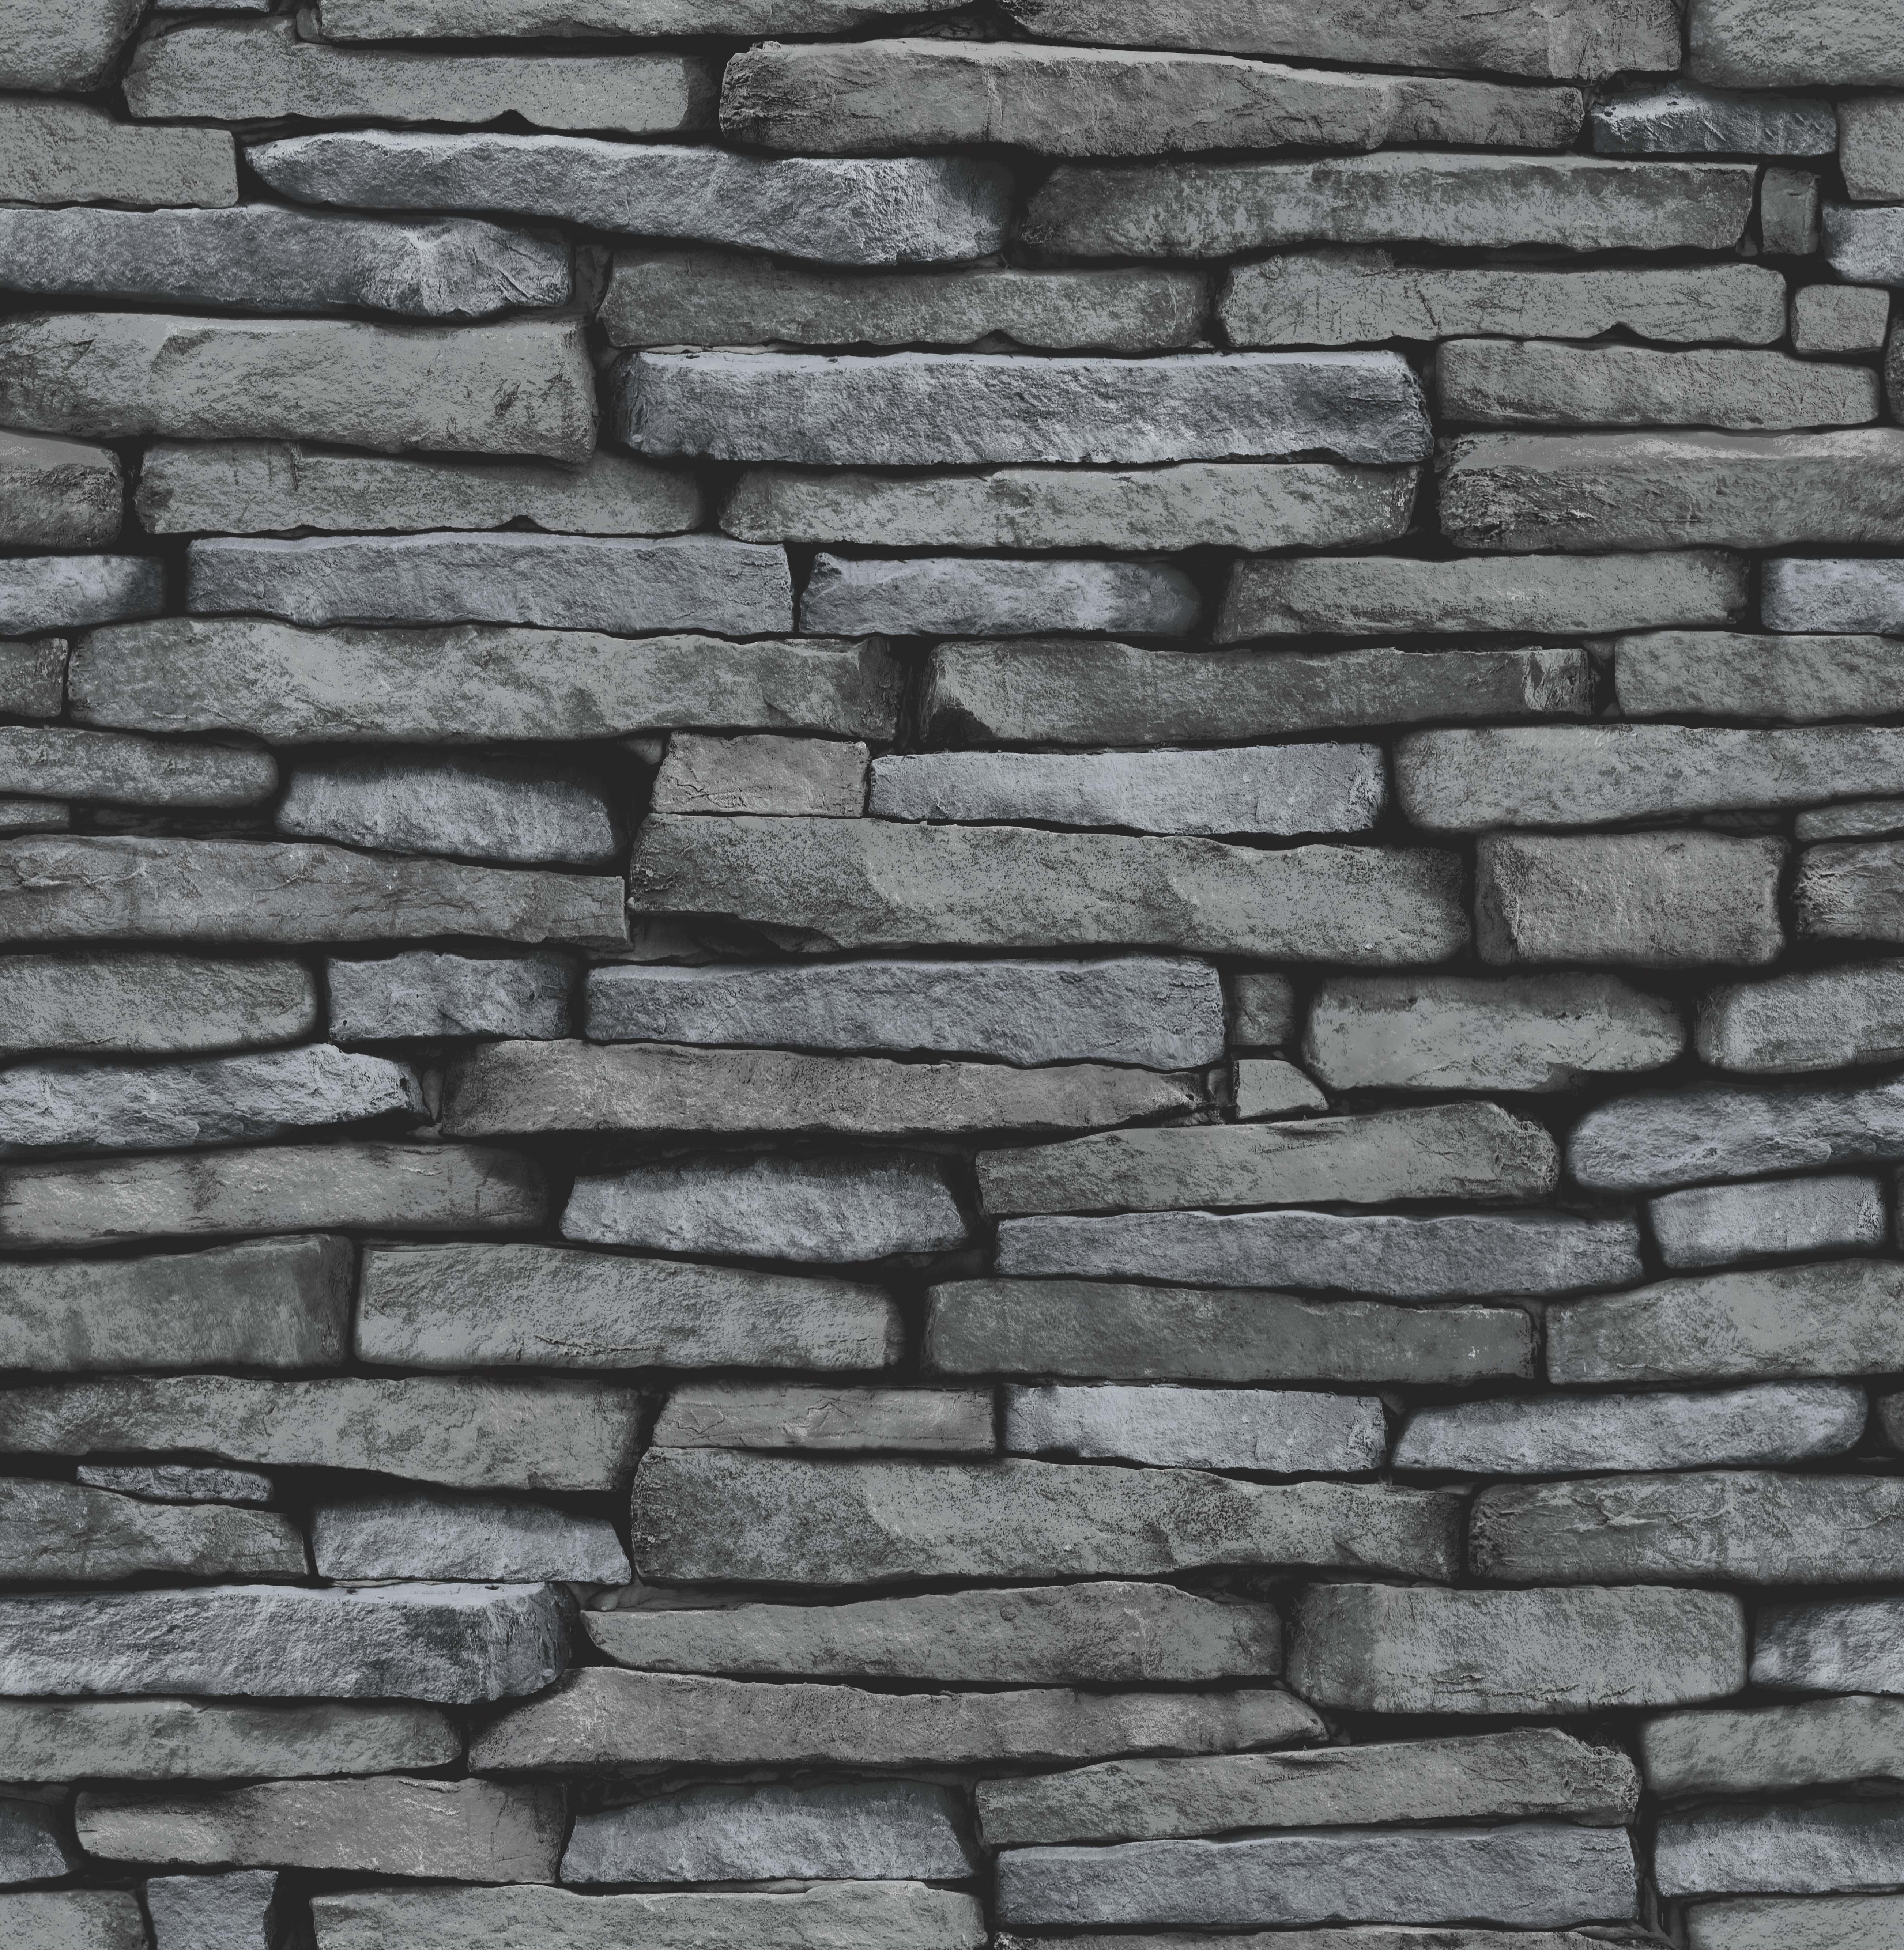 slate wallpaper,brickwork,wall,brick,stone wall,rock